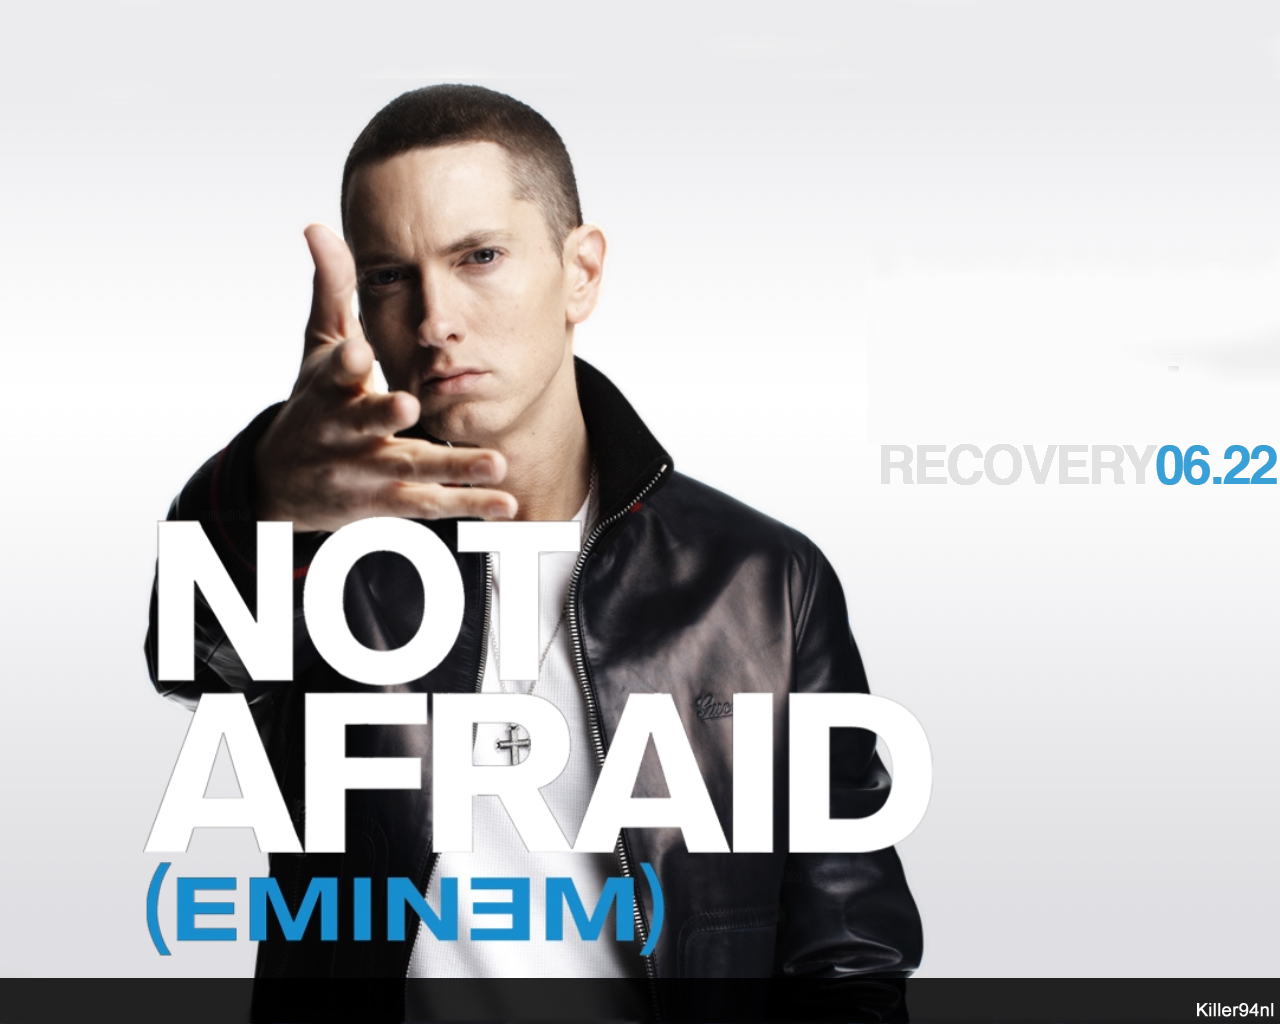 Quem Eminem